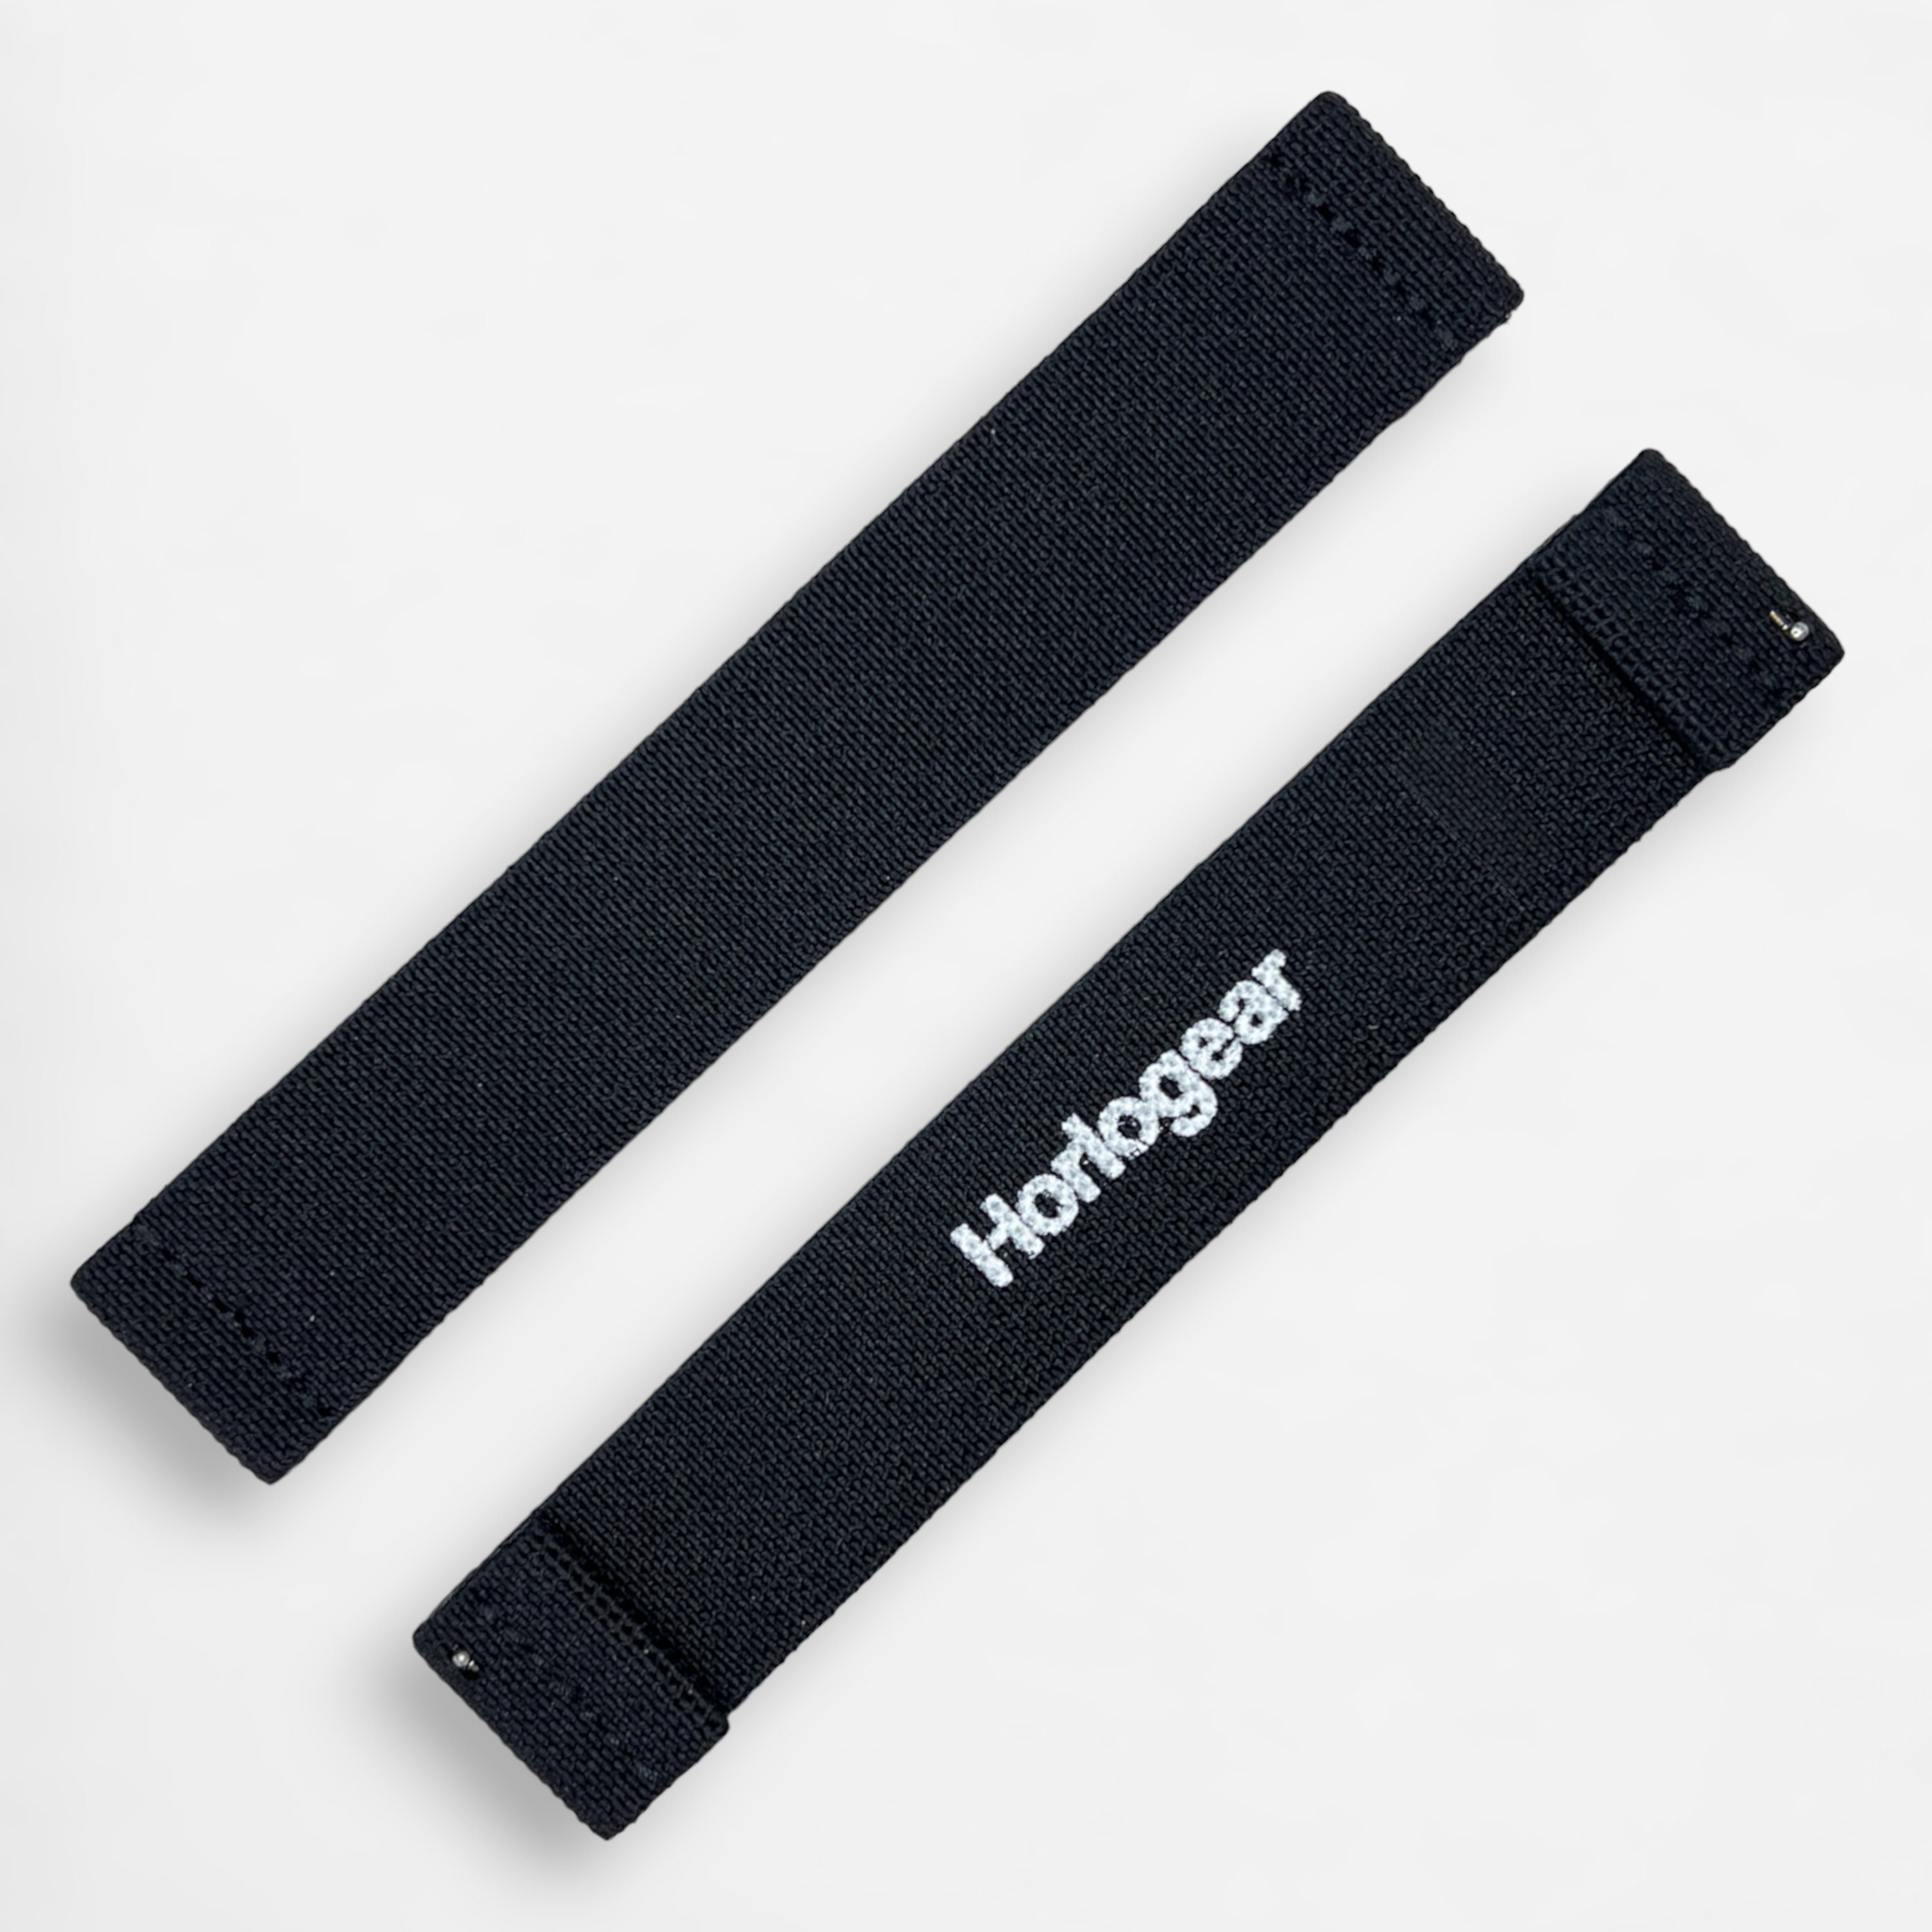 NASA Velcro Strap - Black Nylon & Black Velcro Watch Band